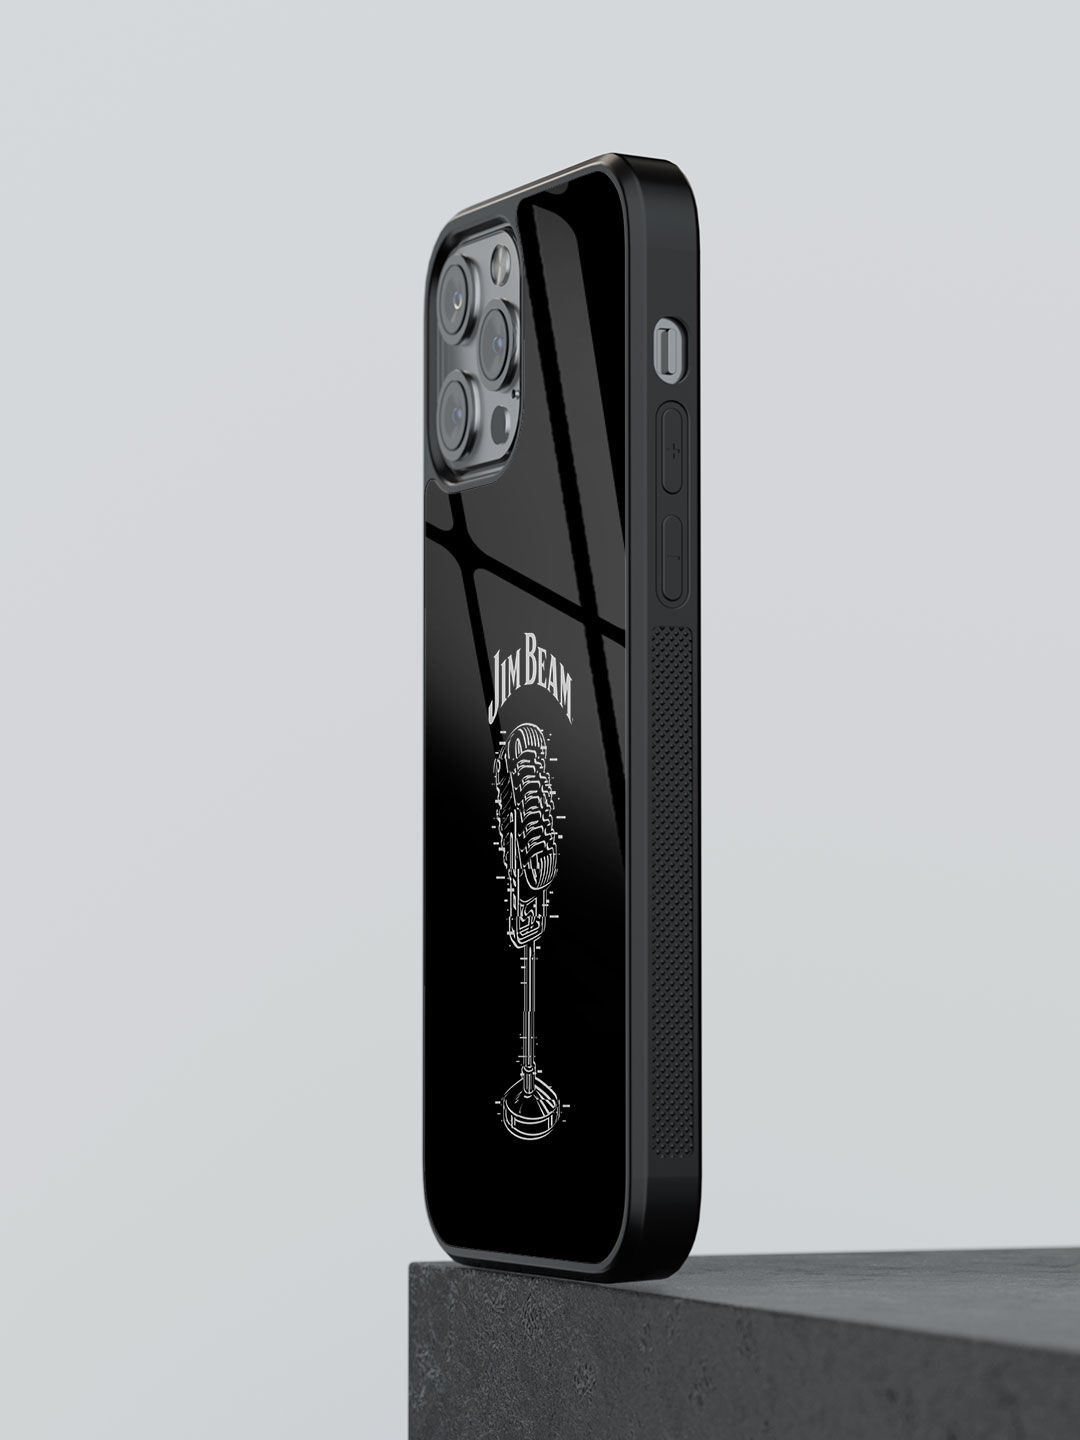 Jim Beam Retro Mic - Glass Case For iPhone 13 Pro Max